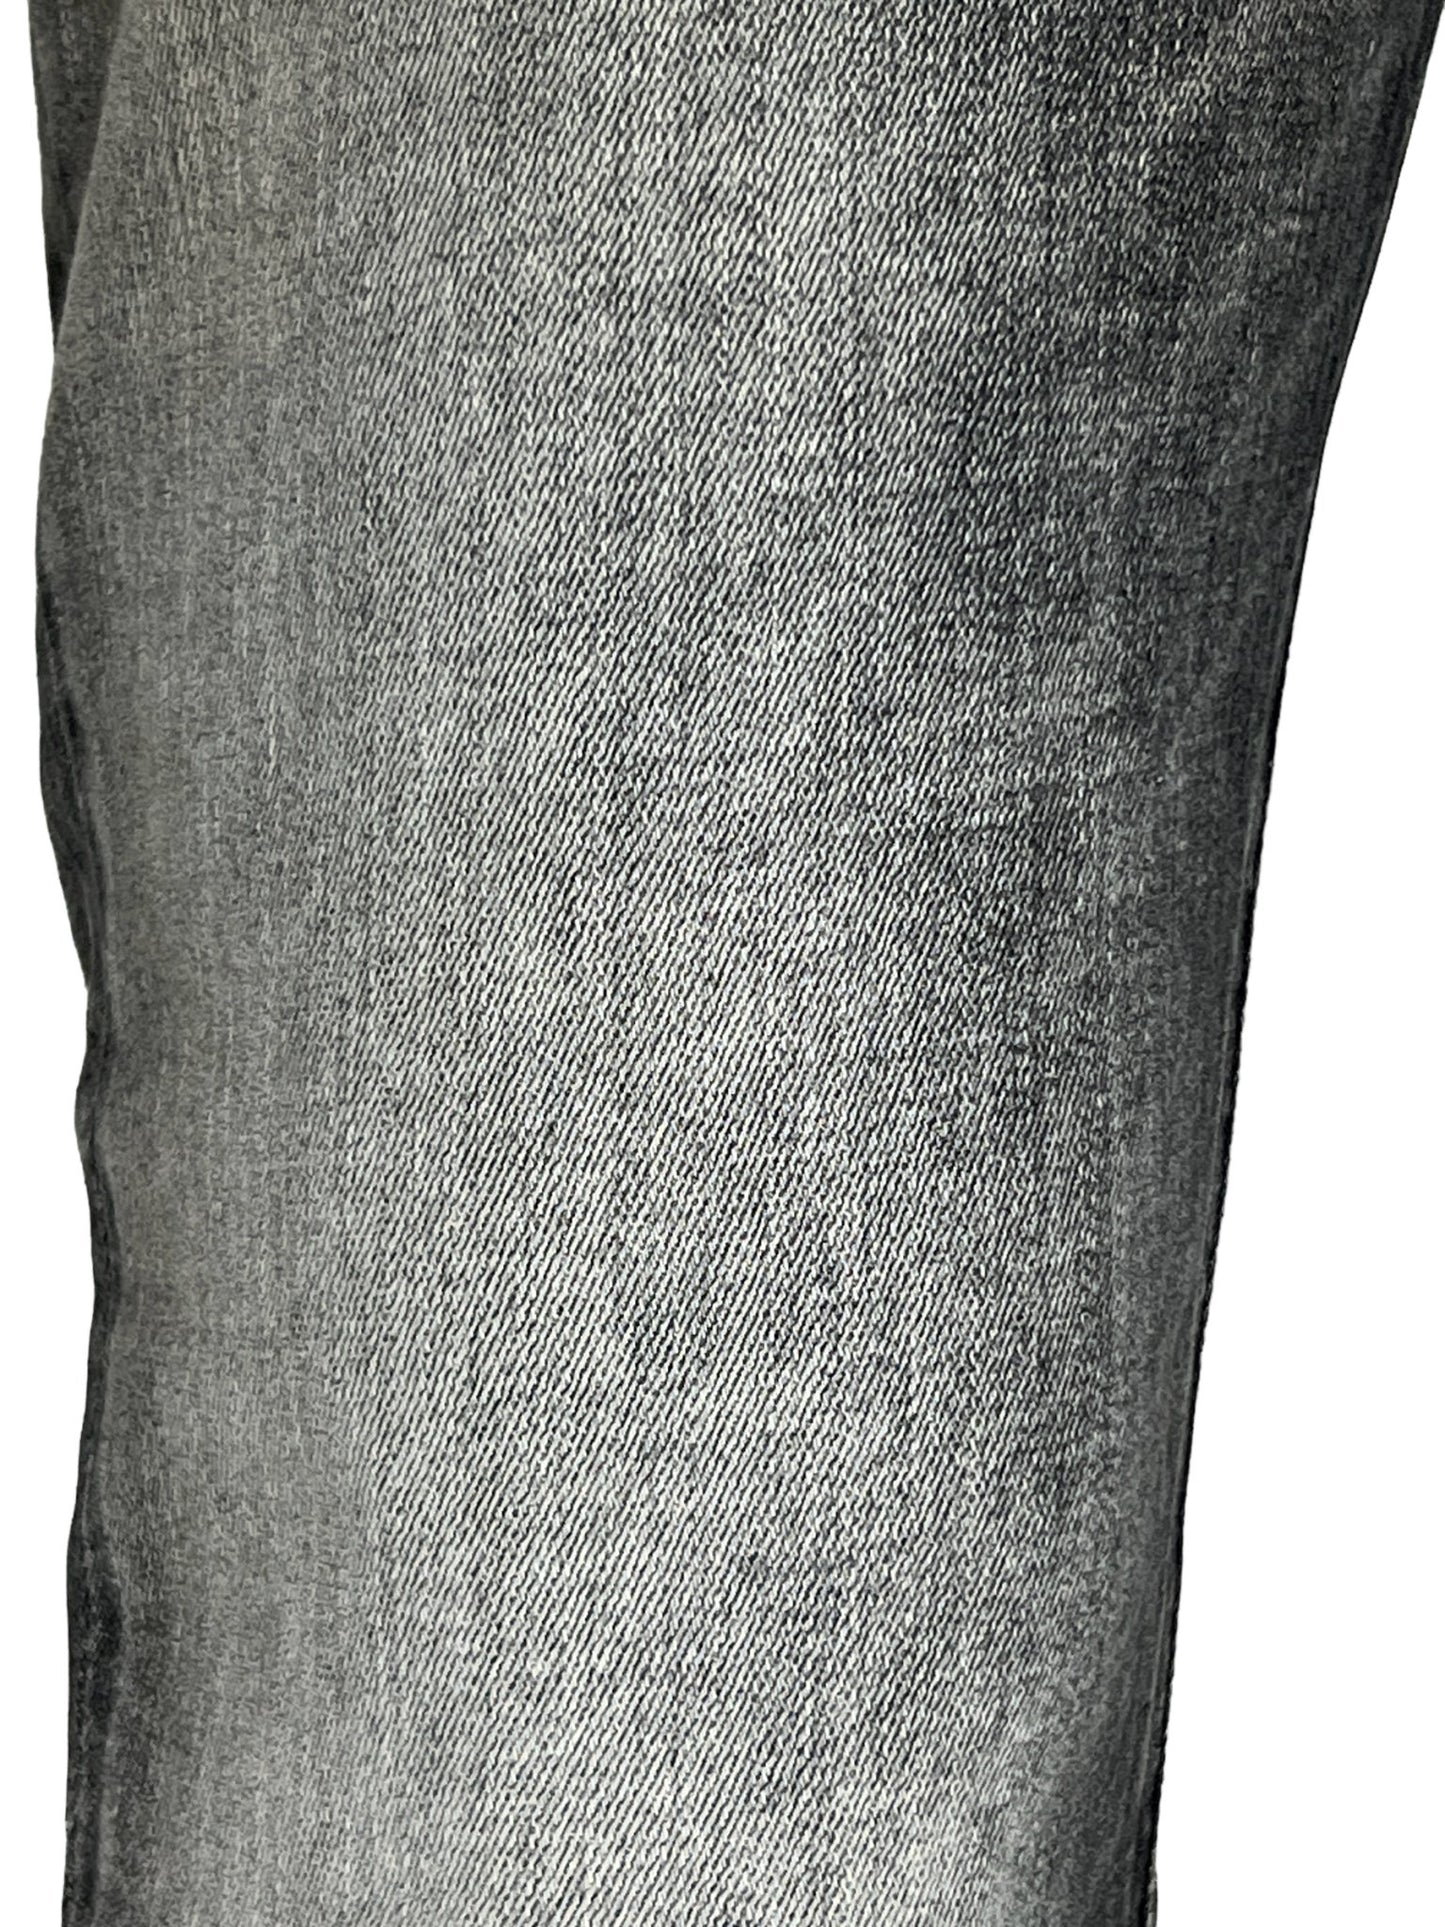 Close-up of a DIESEL 1979 SLEENKER 9H74 stretch denim fabric texture.